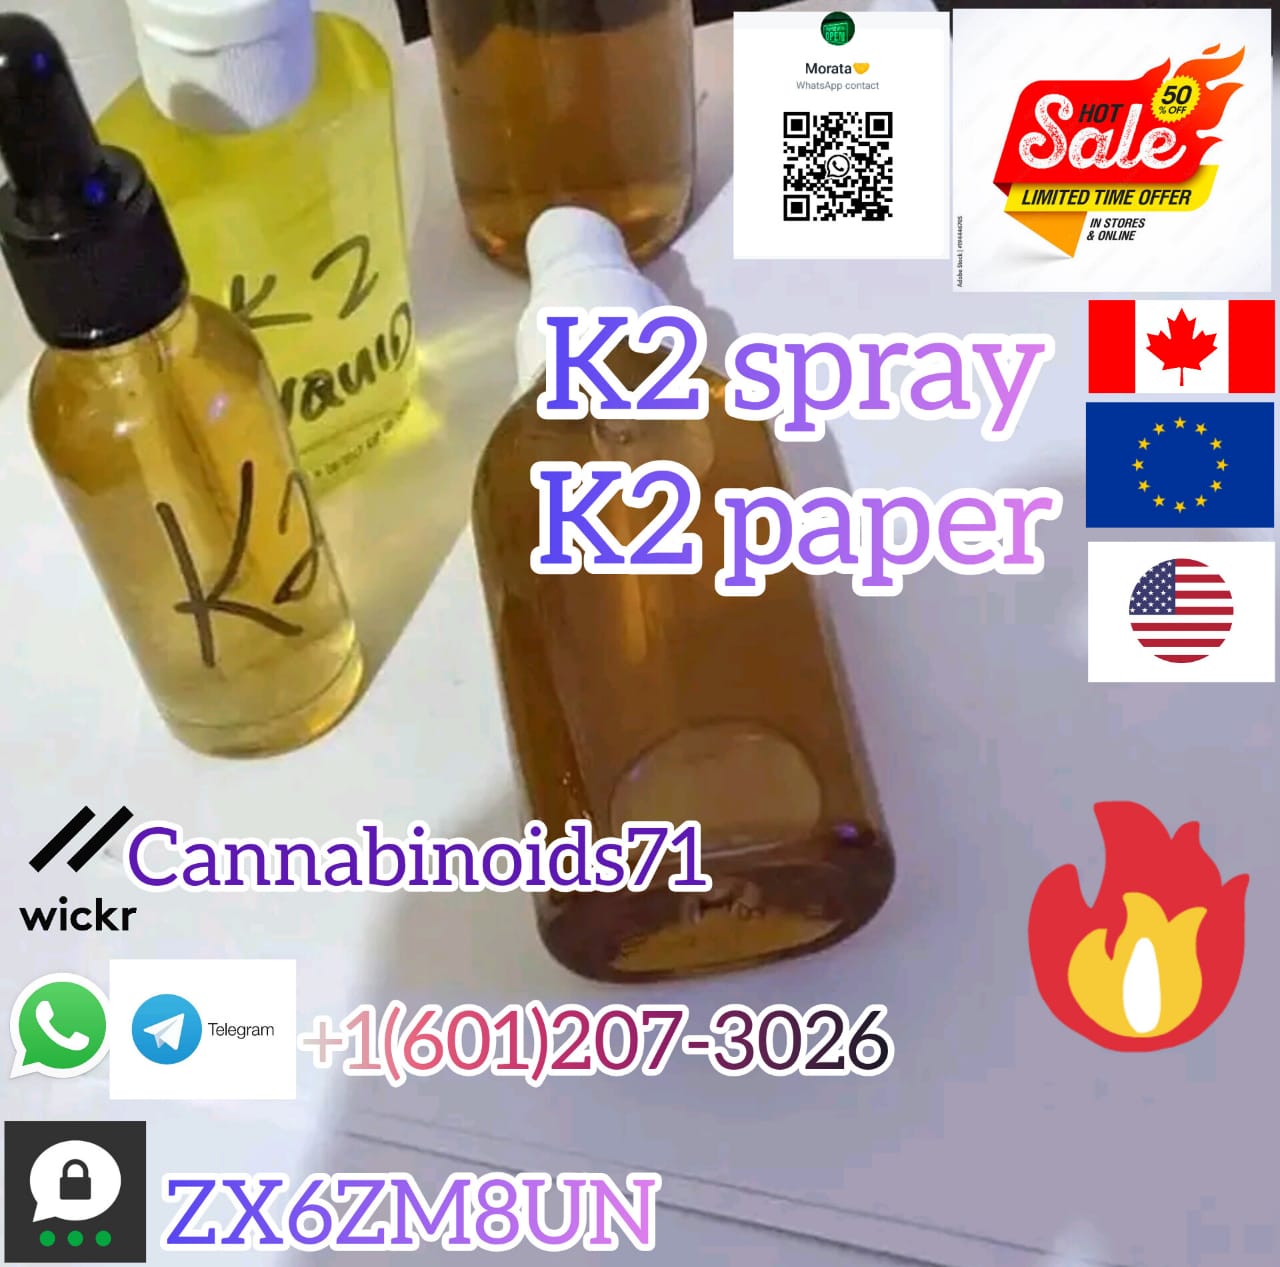 Buy K2 Spray Online| Threema ID_ZX6ZM8UN | K2 Spice Paper| Order K2 Sheets 